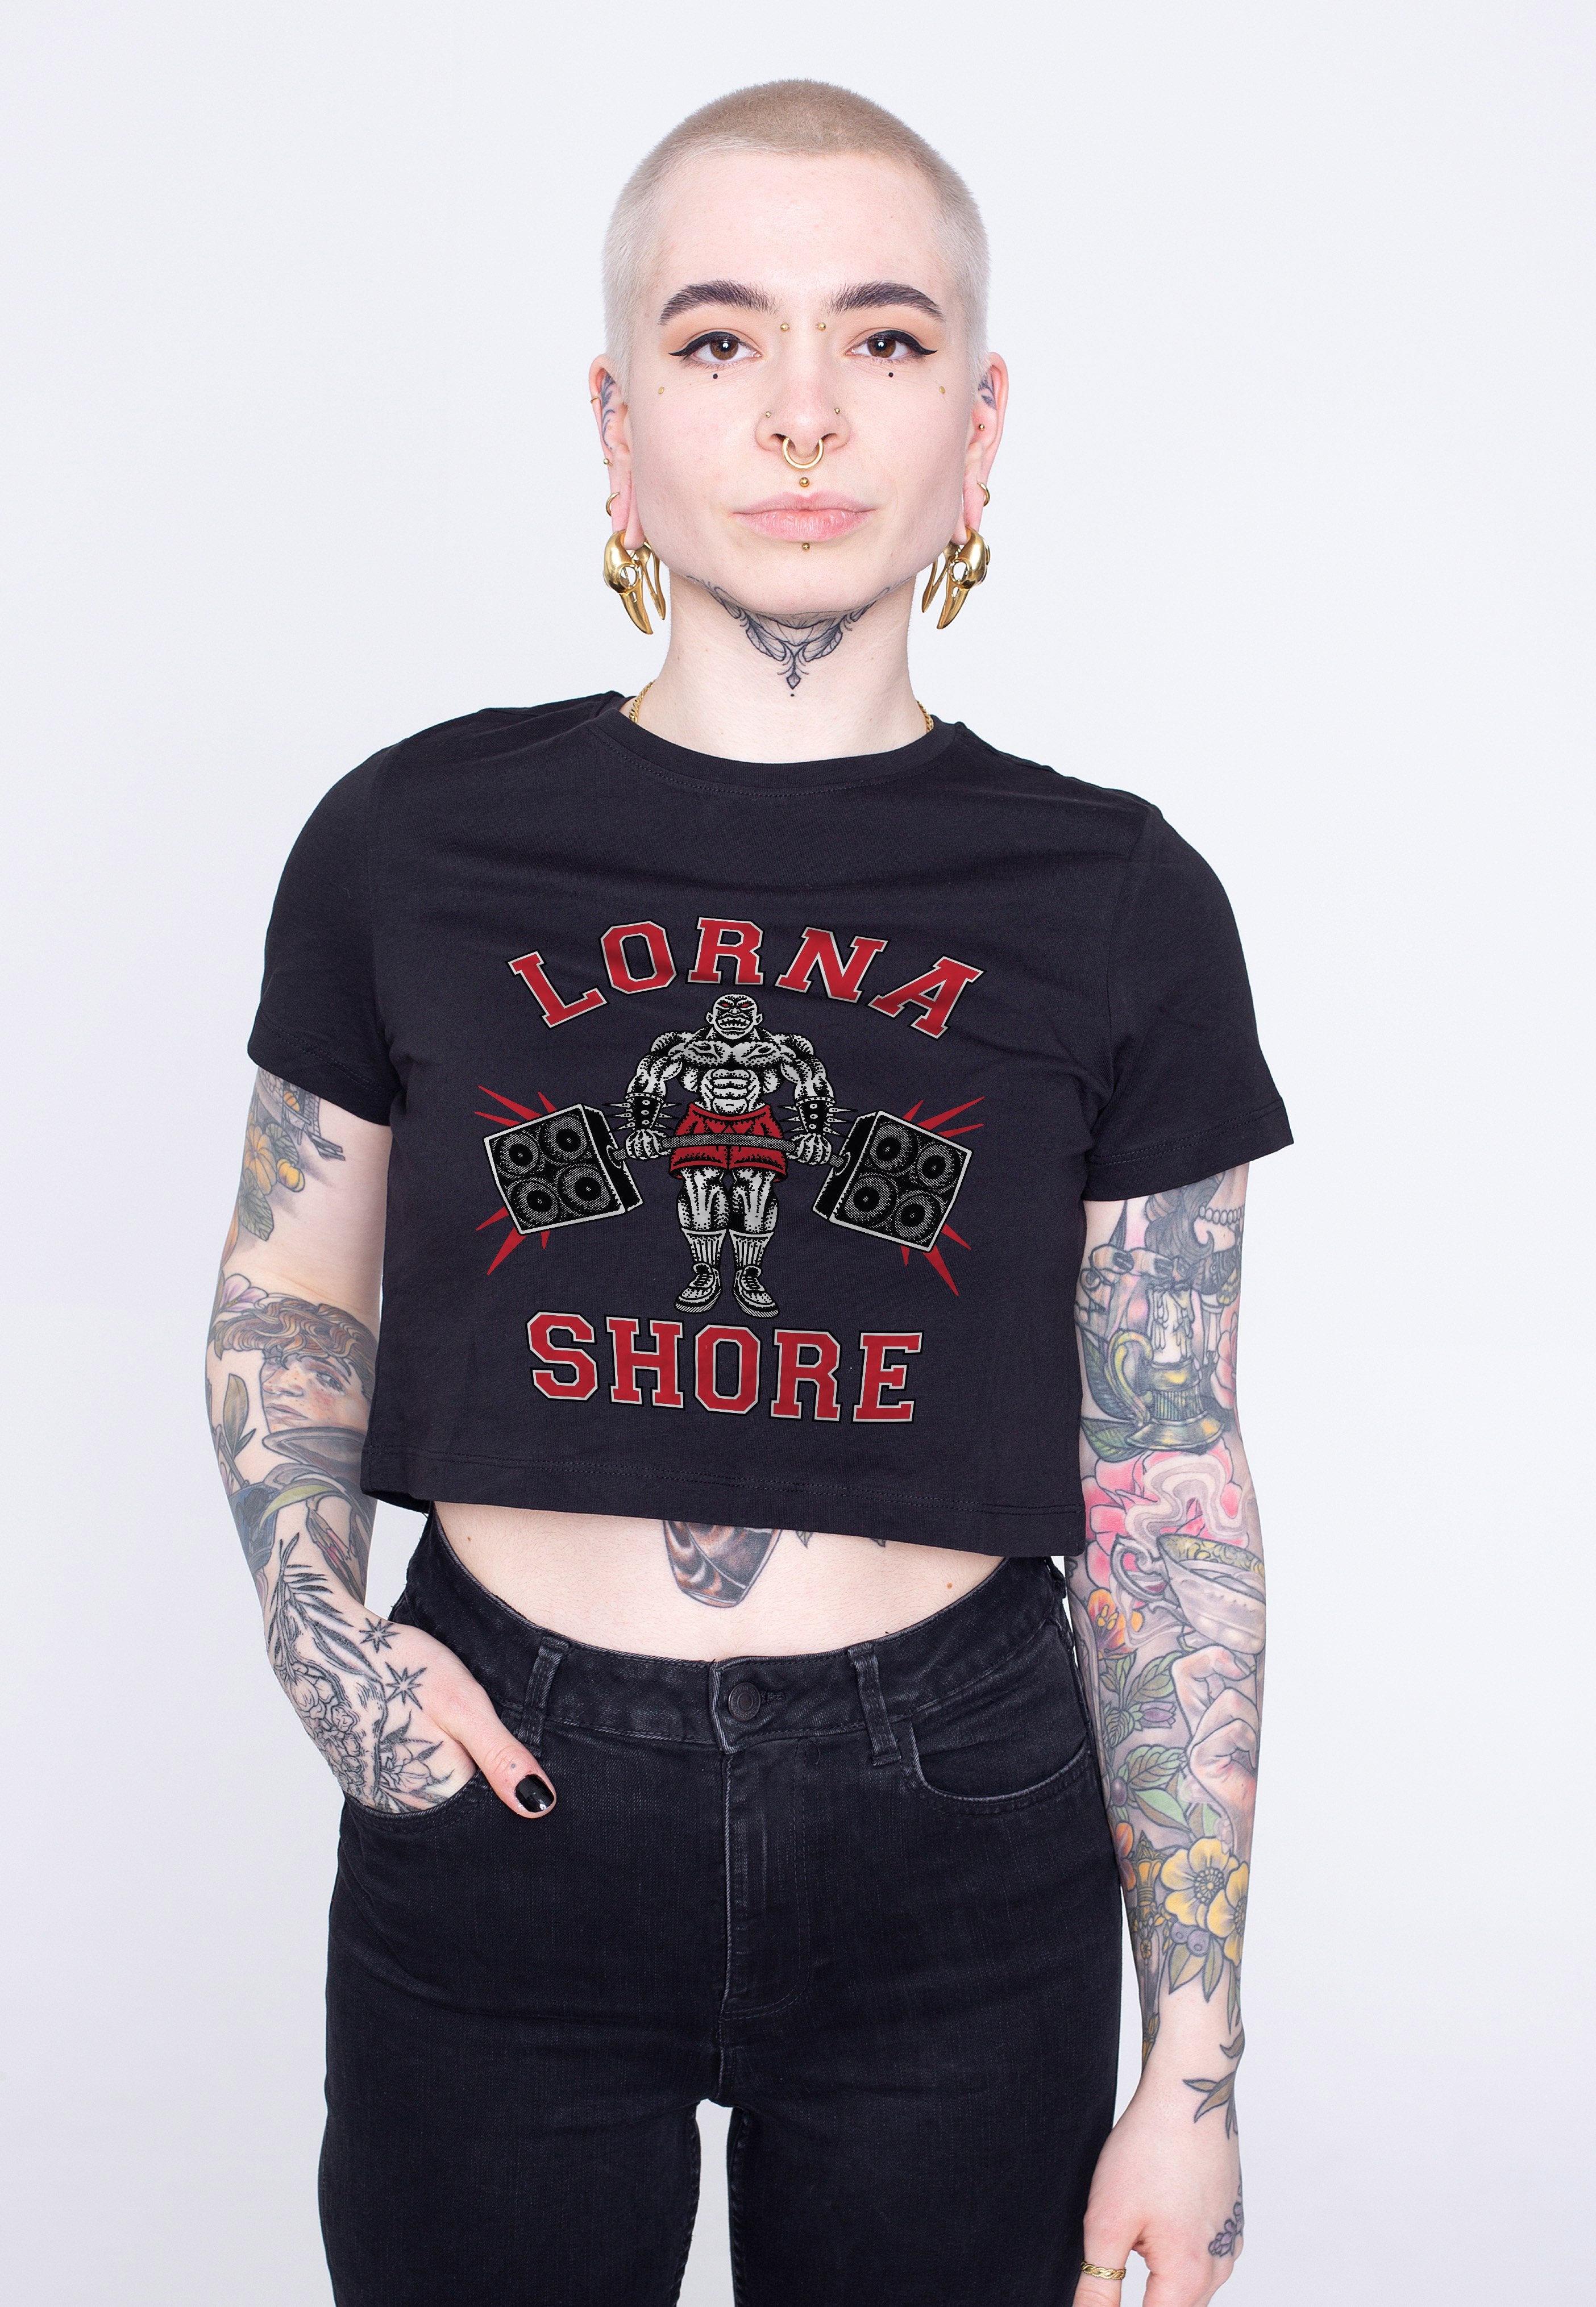 Lorna Shore - No Pain No Gain Solid Black Cropped - Girly | Women-Image